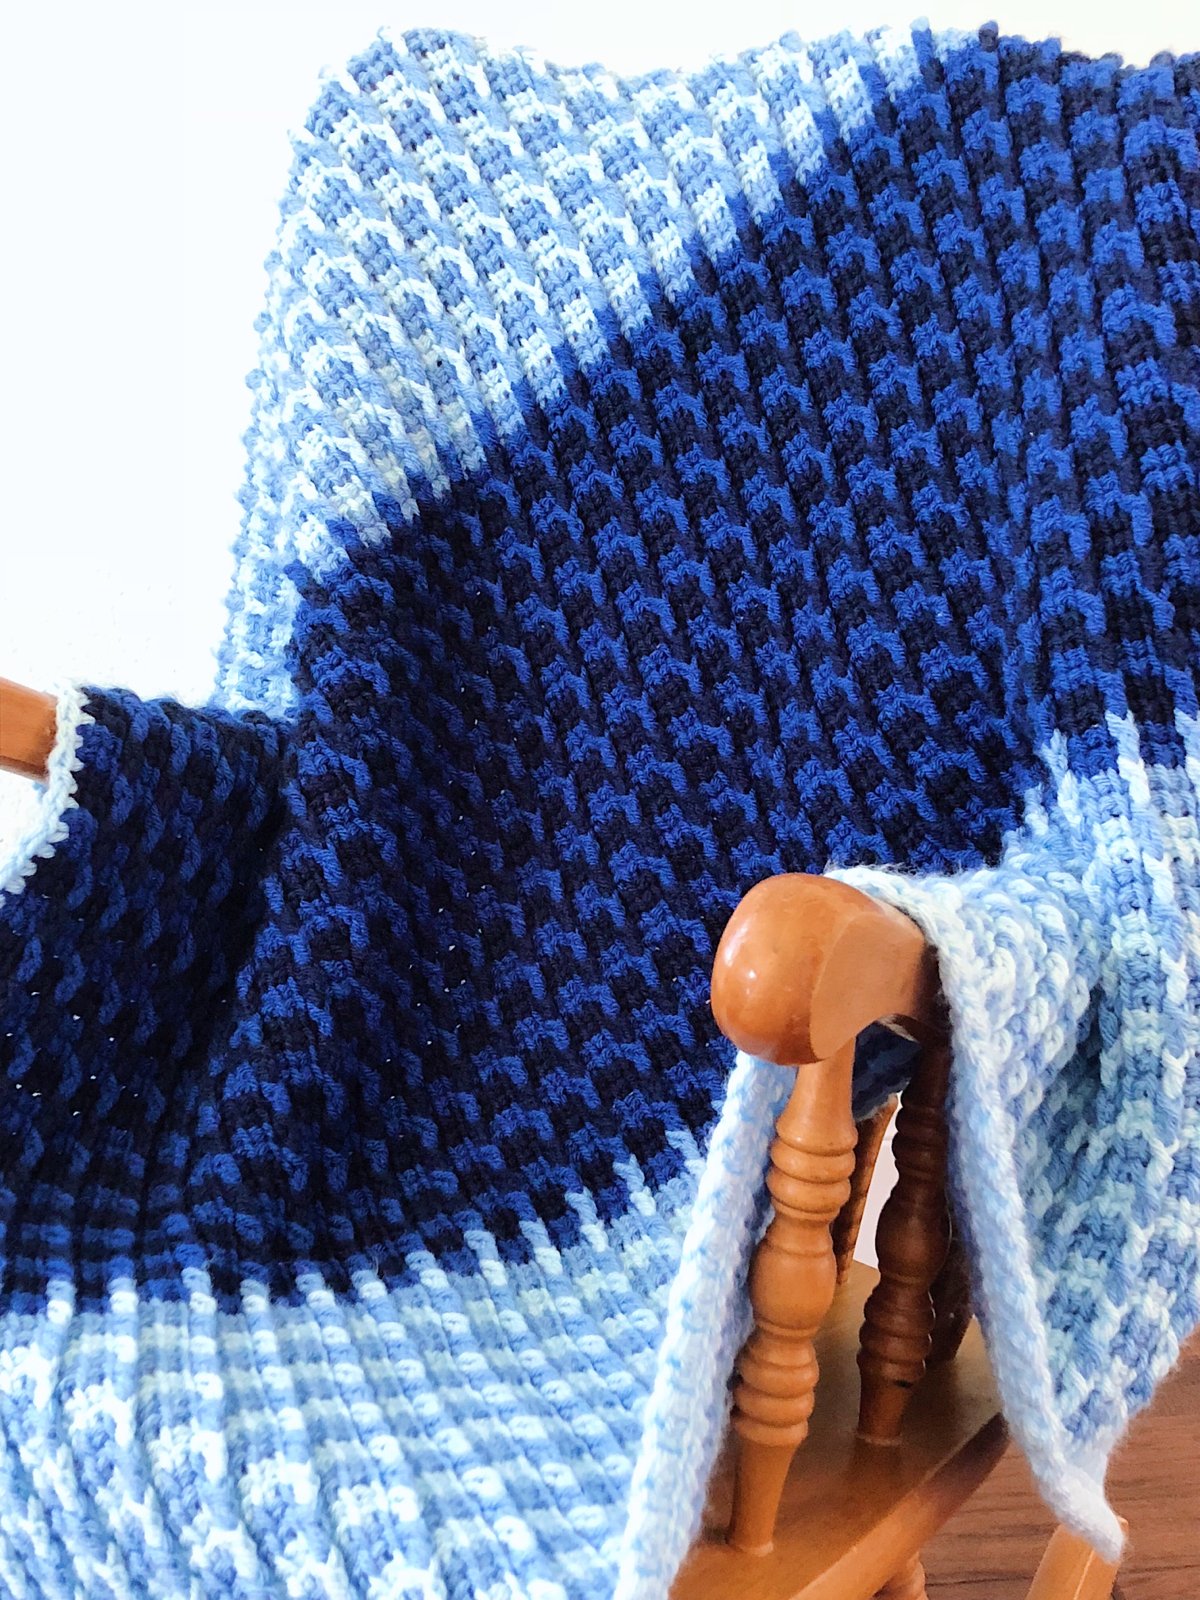 tunisian crochet baby afghan patterns free